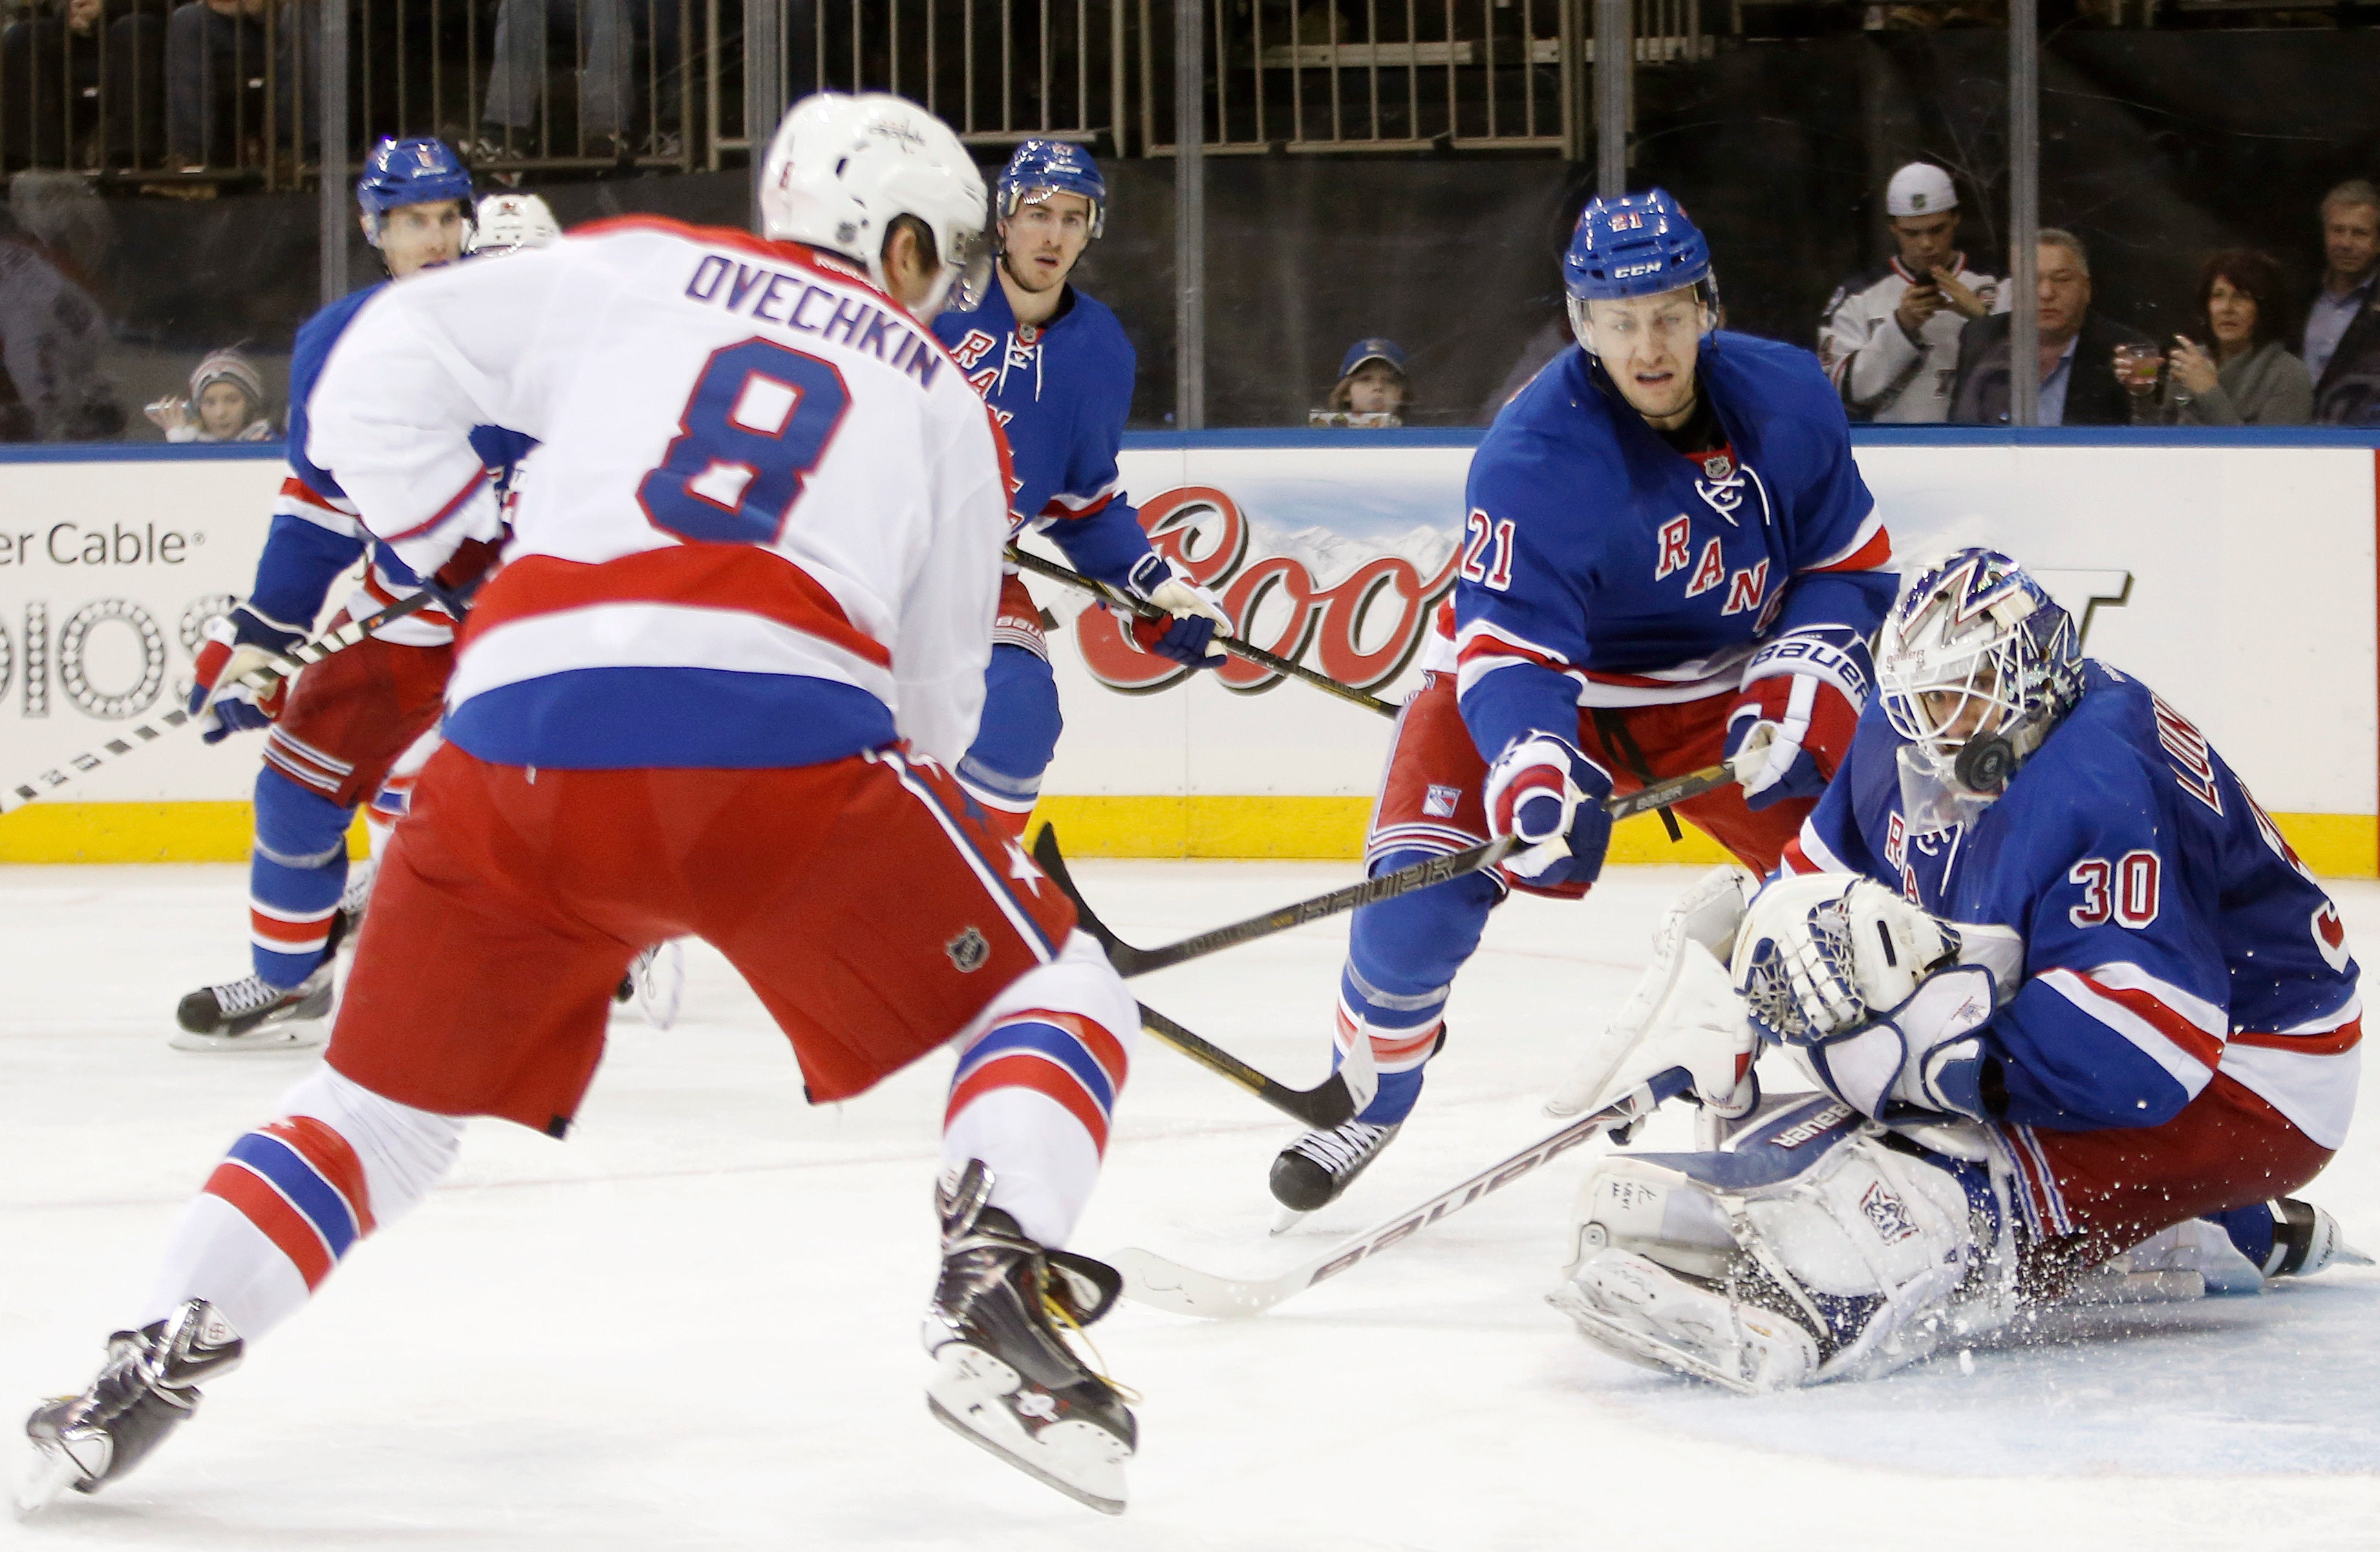 Lower-body injury sidelines Capitals star Alex Ovechkin against Senators